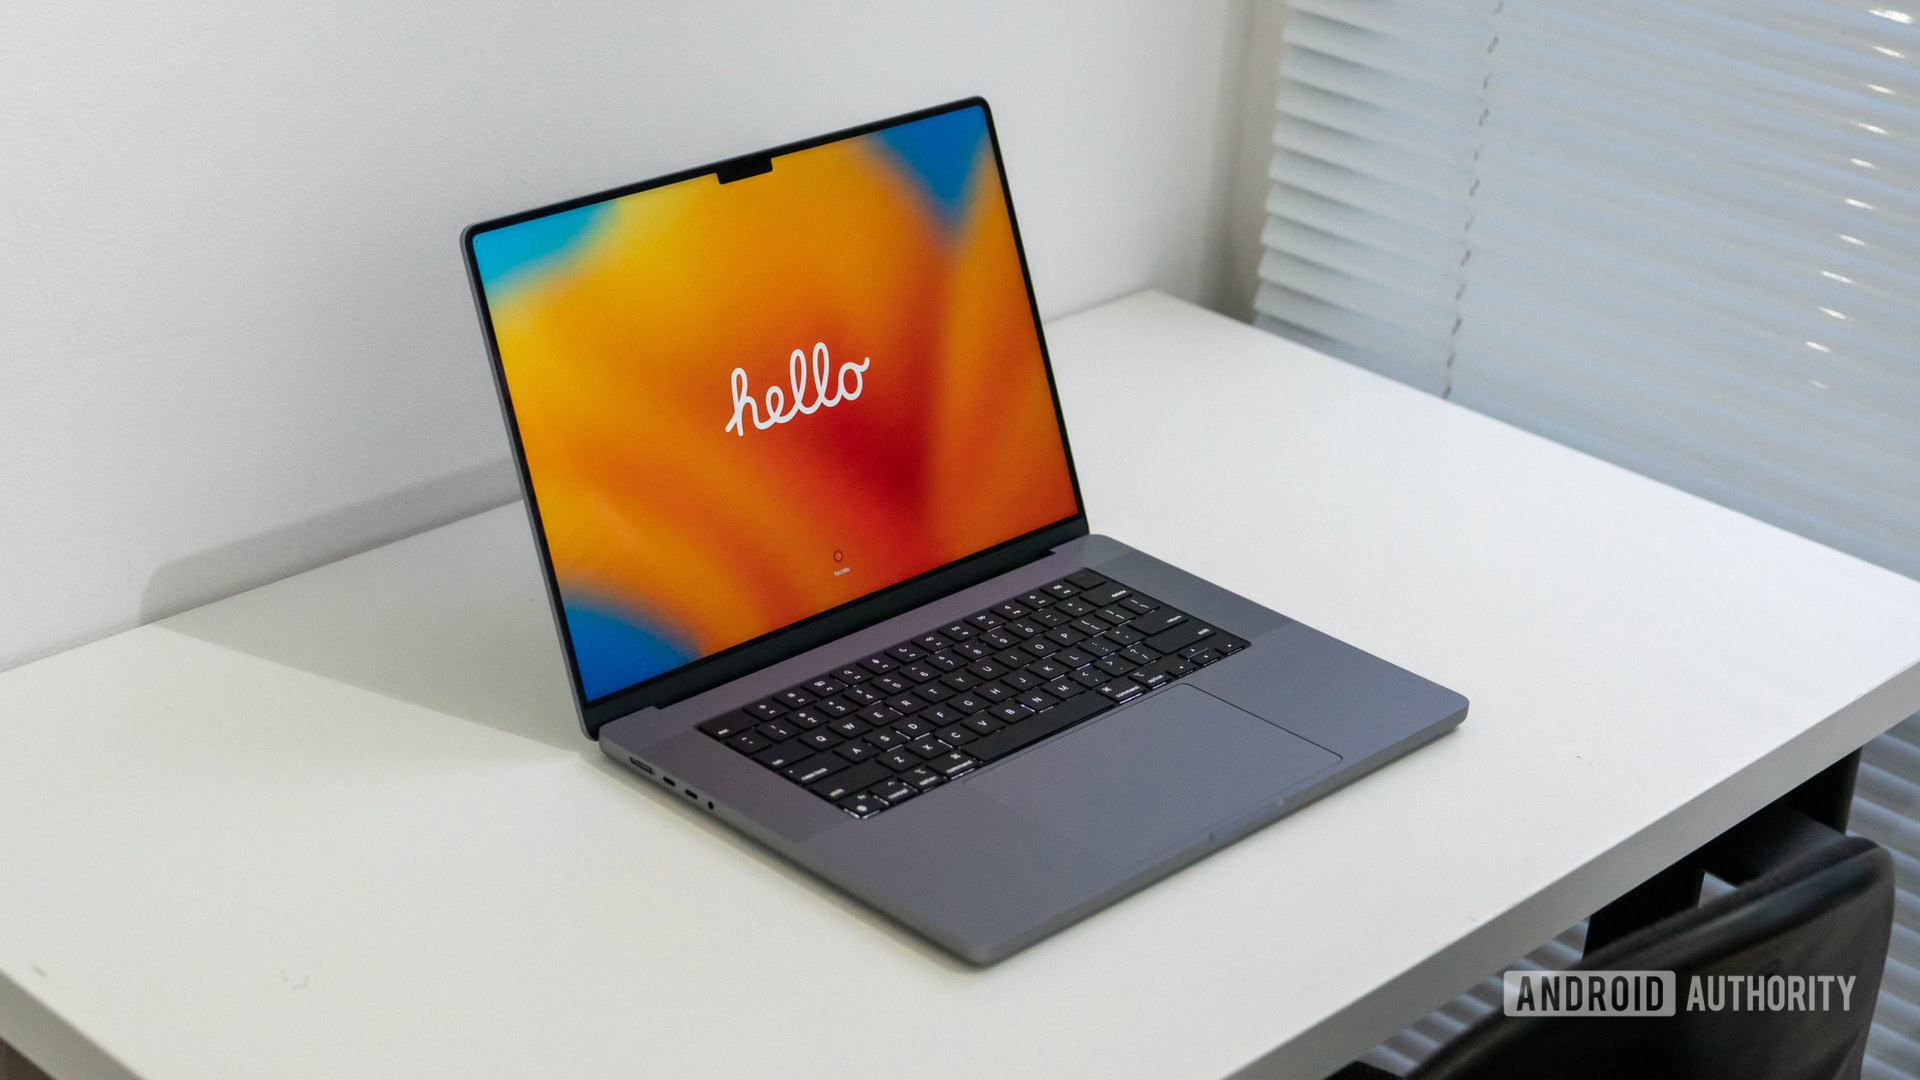 Cute Smile Face MacBook Case for New MacBook Pro 16 15 MacBook 